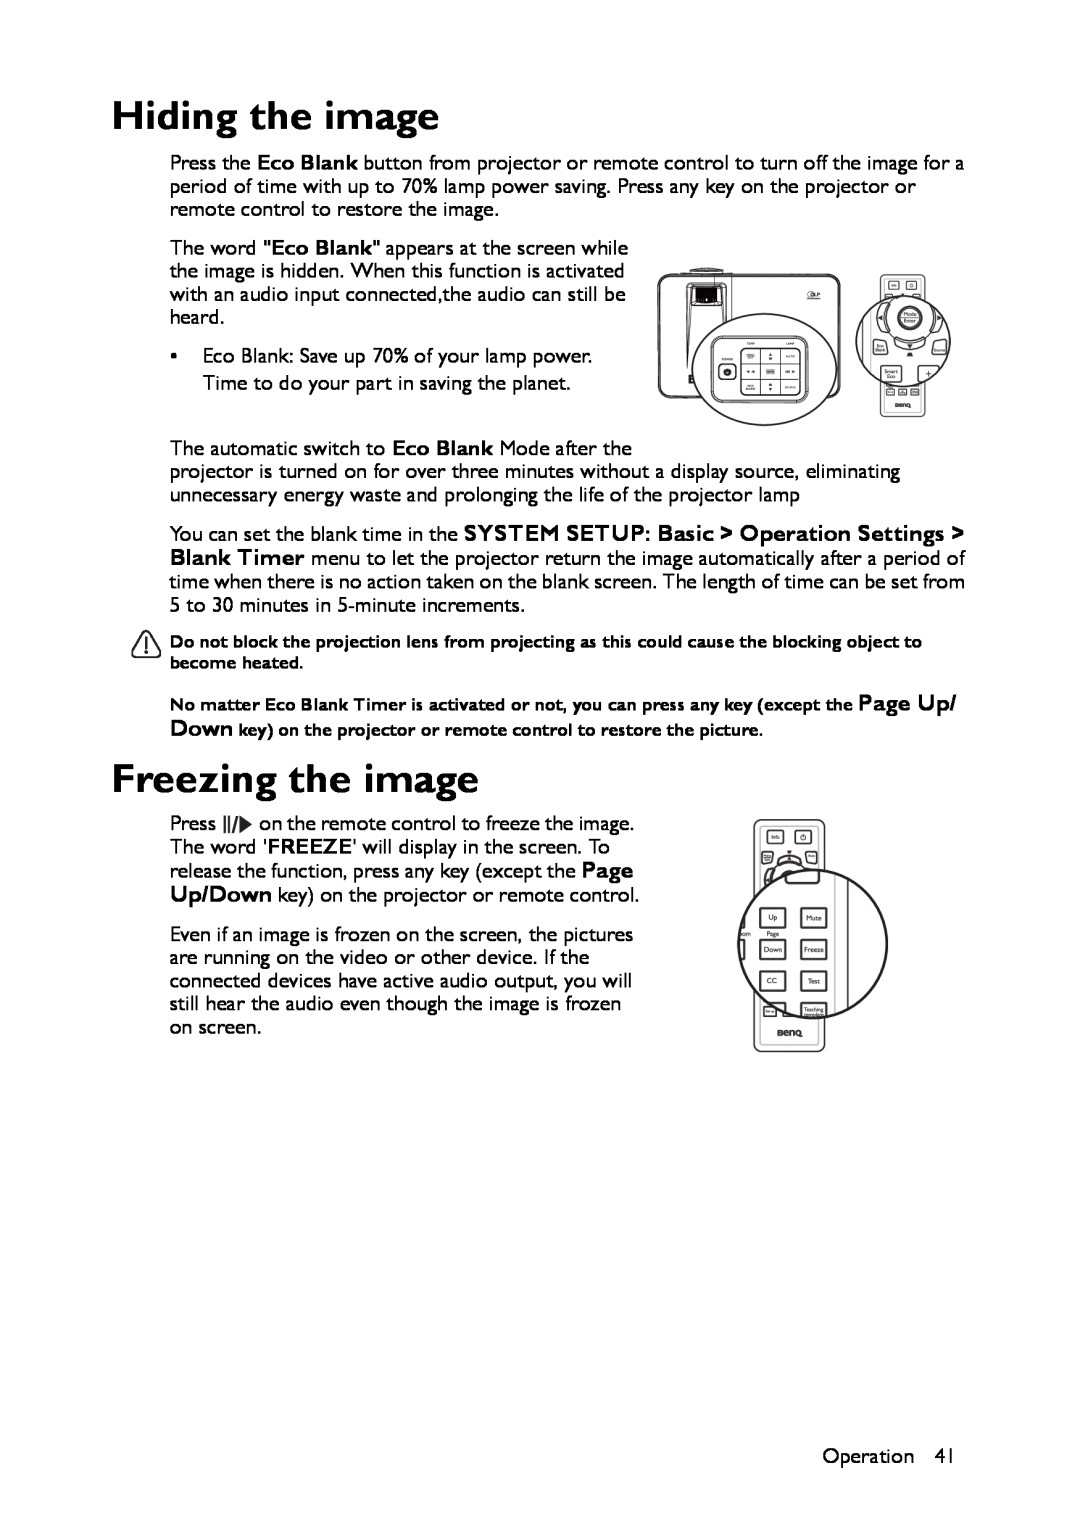 BenQ MX661 user manual Hiding the image, Freezing the image 